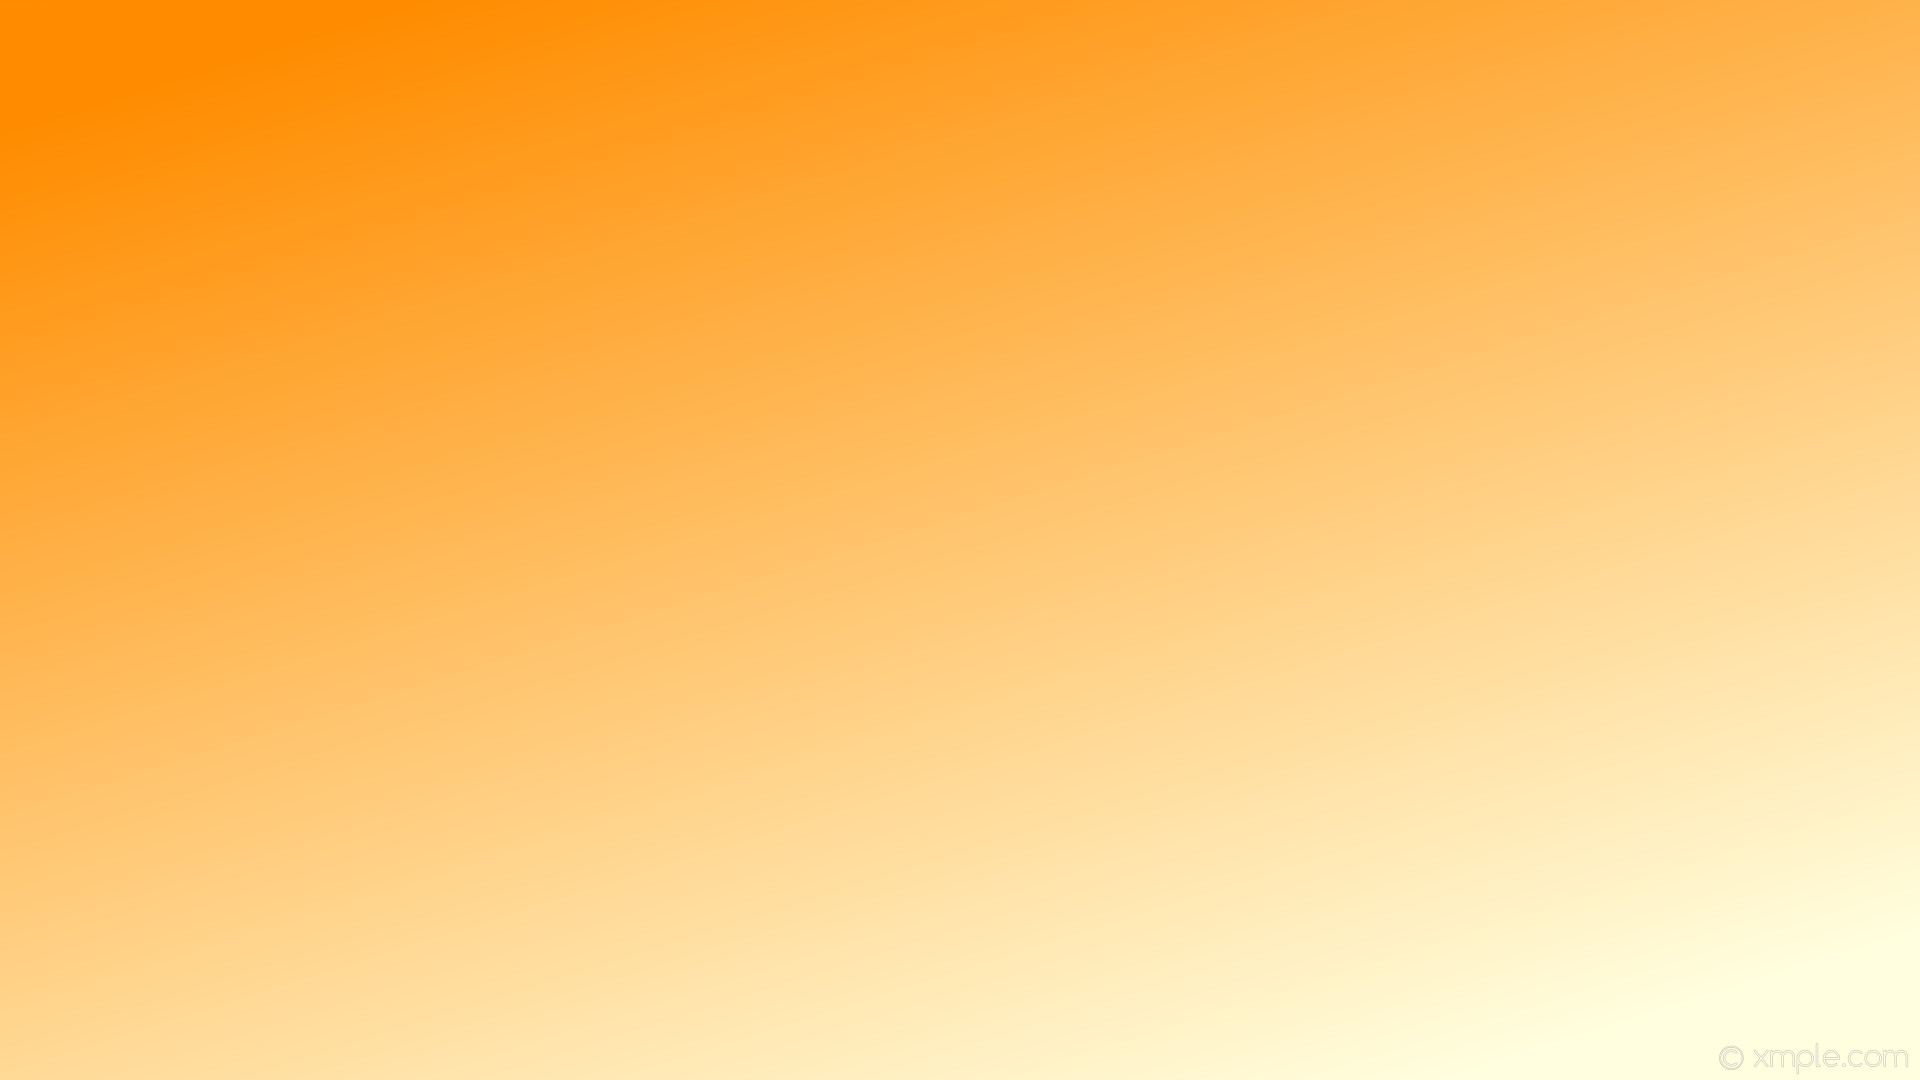 1920x1080 wallpaper orange gradient yellow linear light yellow dark orange #ffffe0  #ff8c00 315Â°